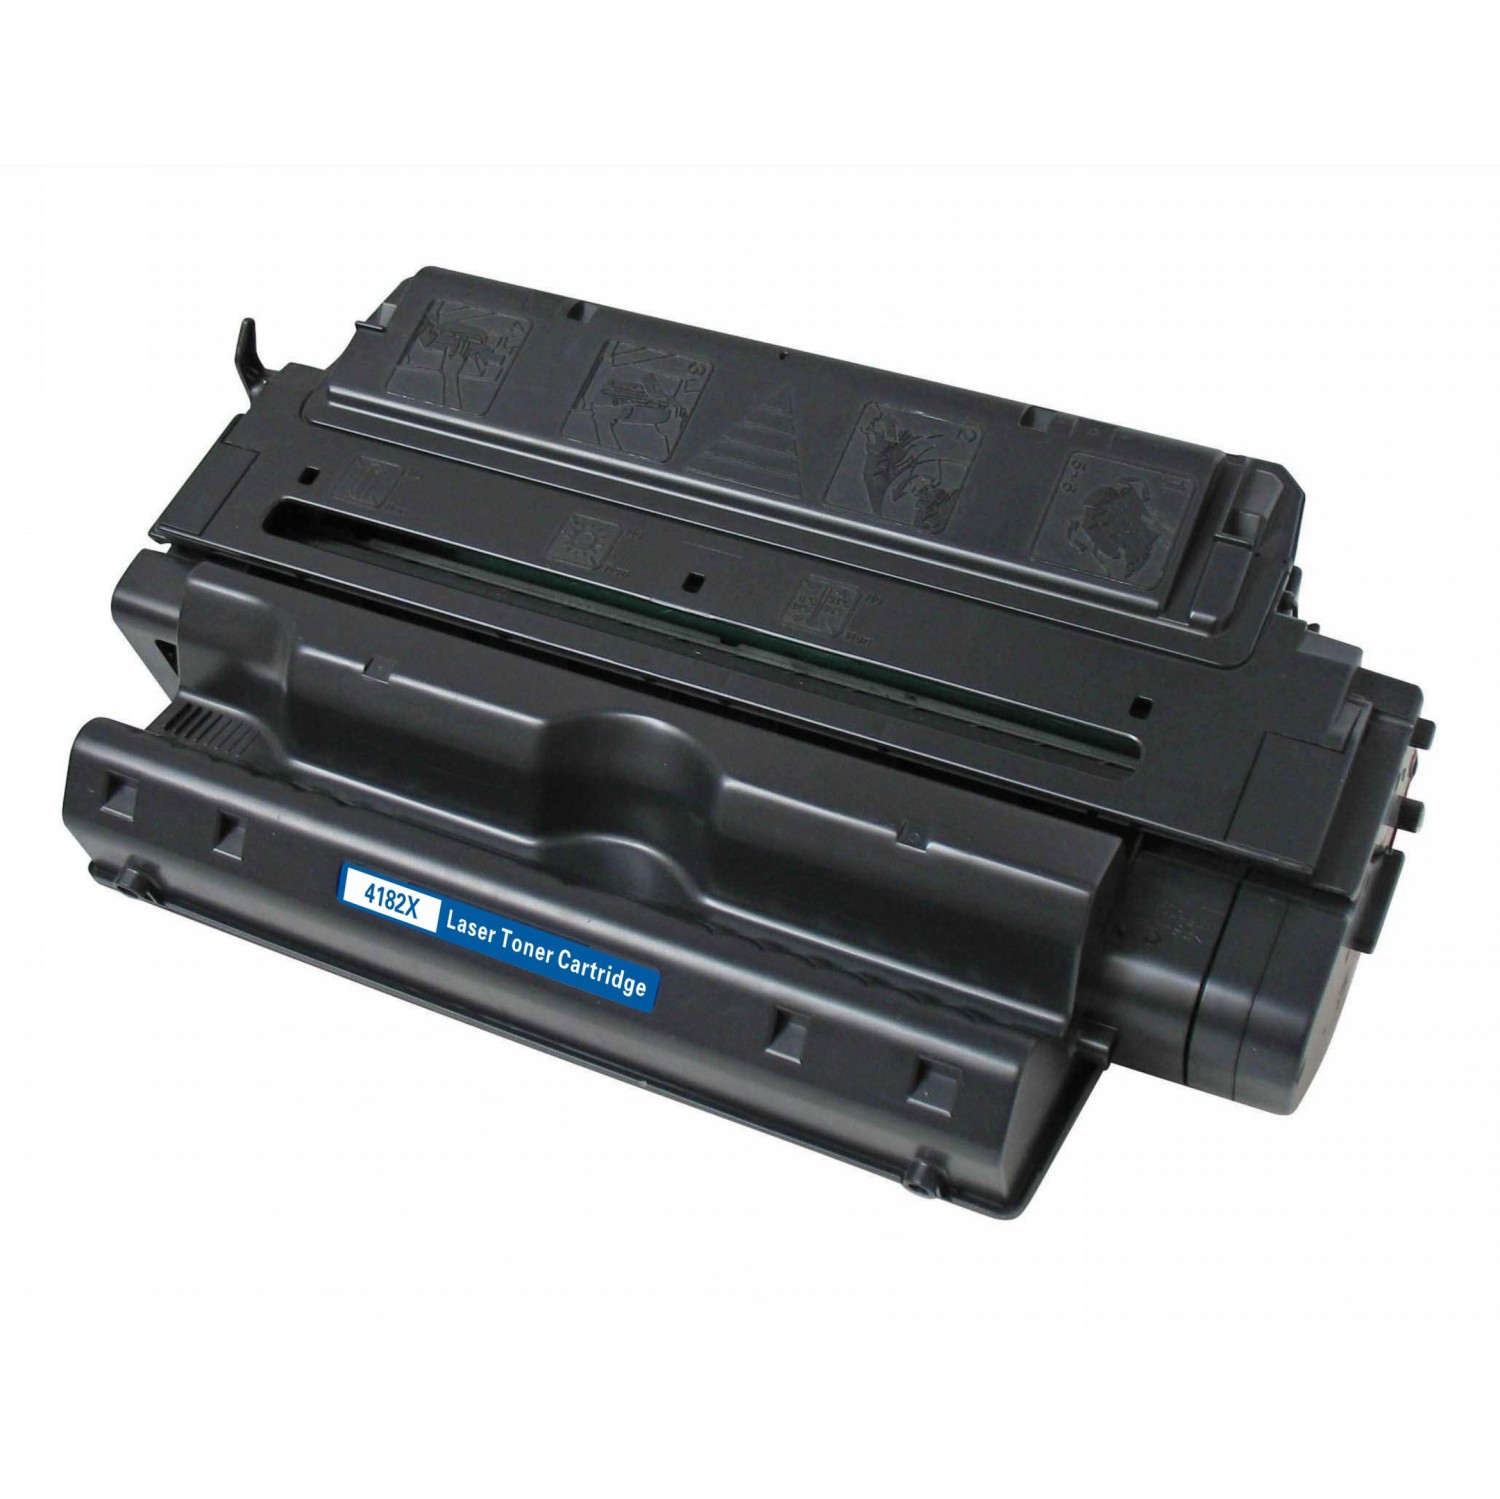 Reman  toner cartridge for HP C4182X